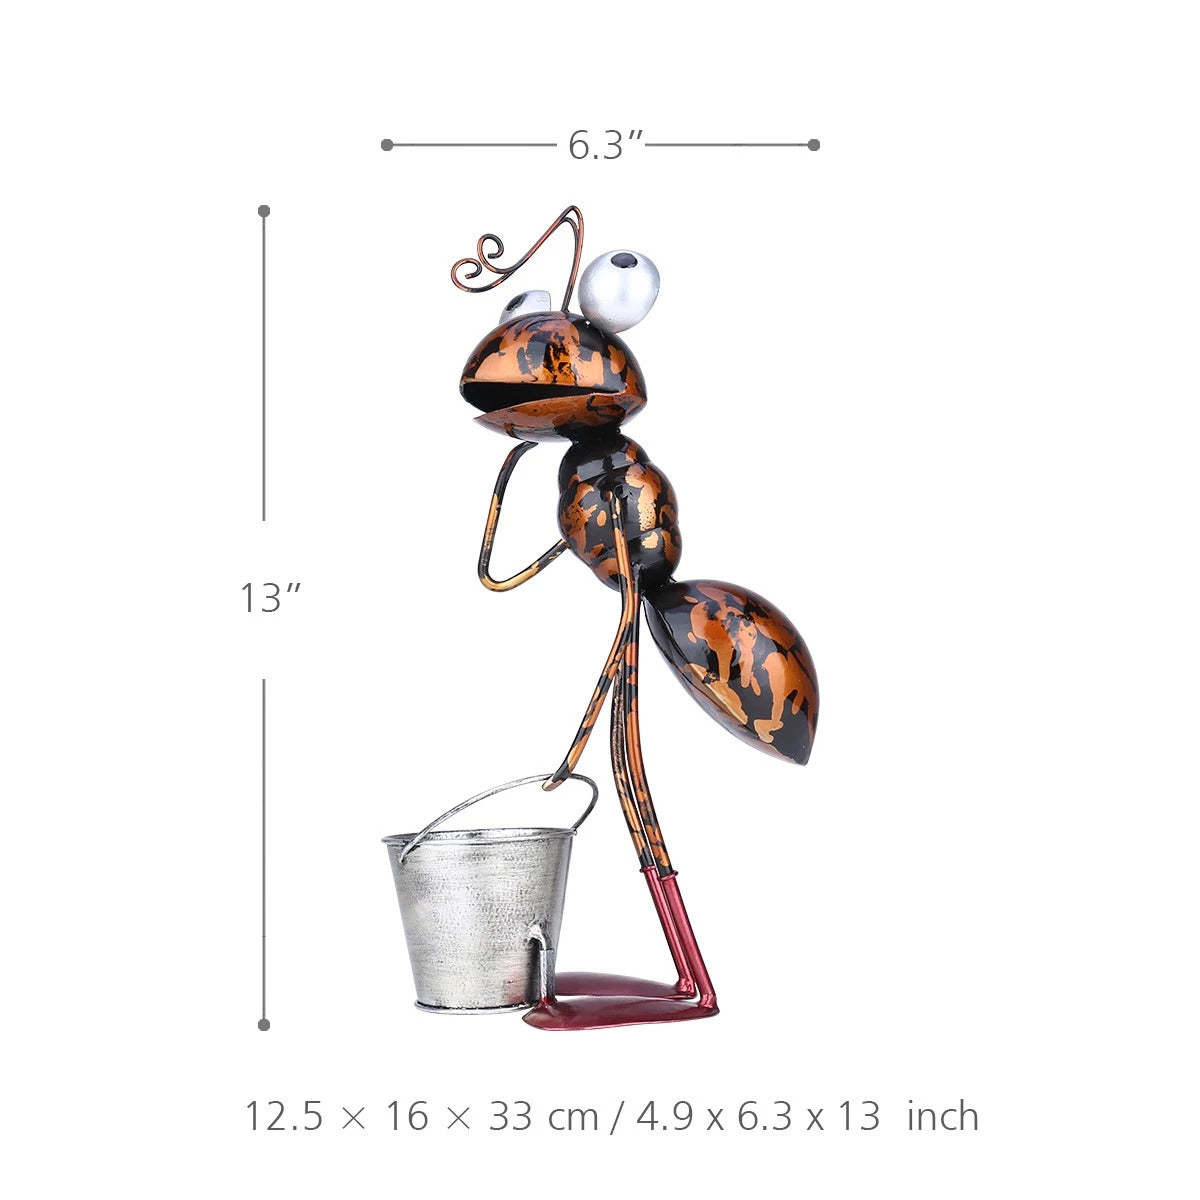 Cartoon-Hardworking Ant Figurines as Gardener to Garden Decor and Ornaments